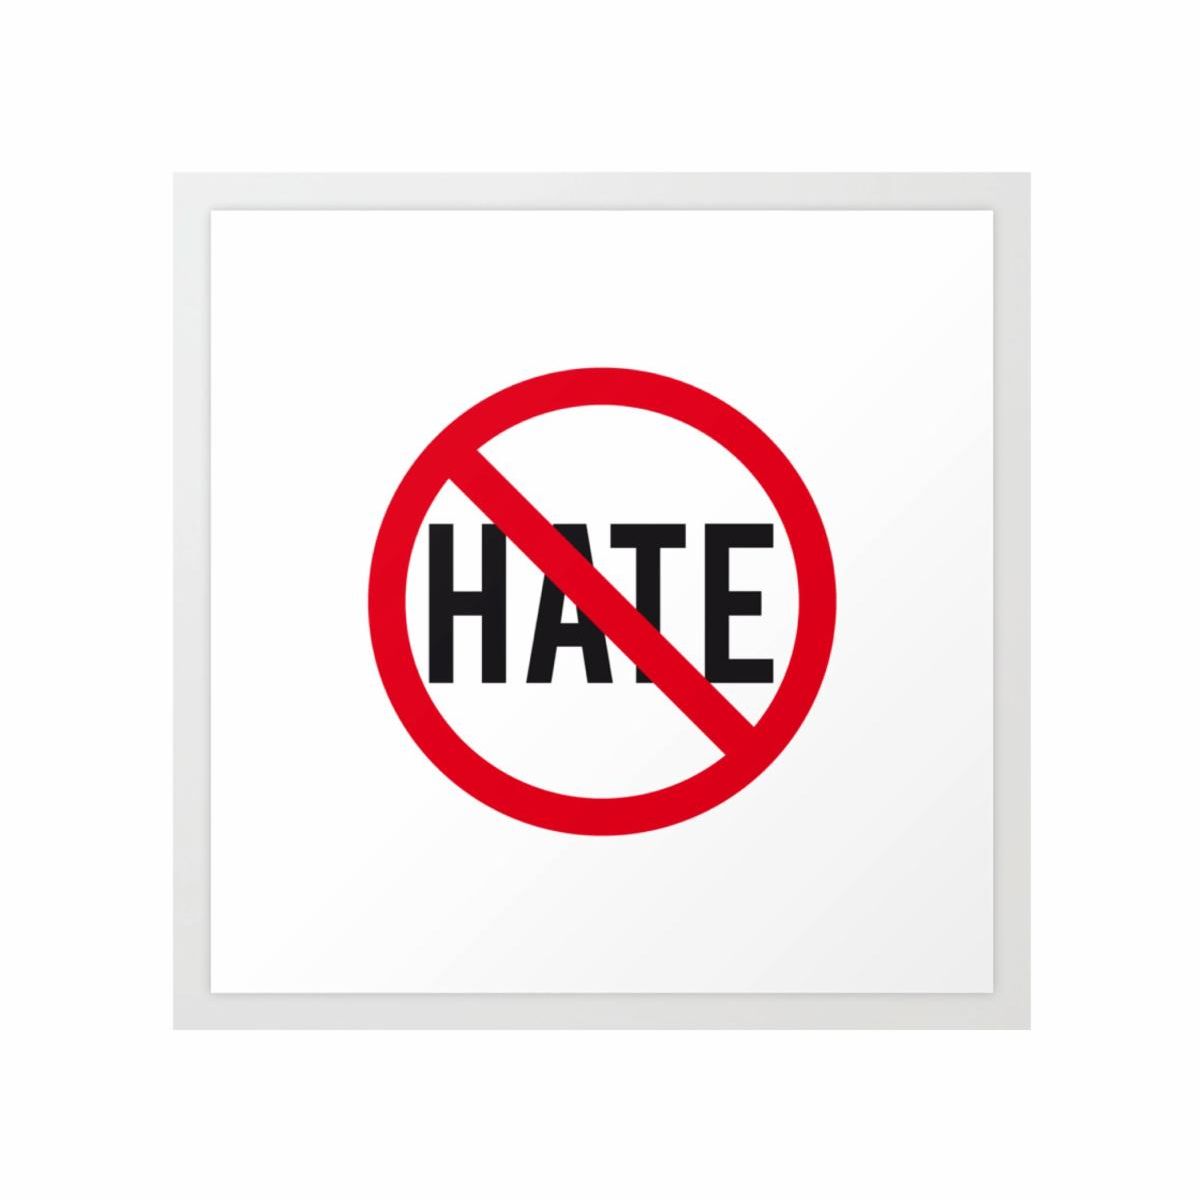 Condemn hate and build hope. conta.cc/384QgBL